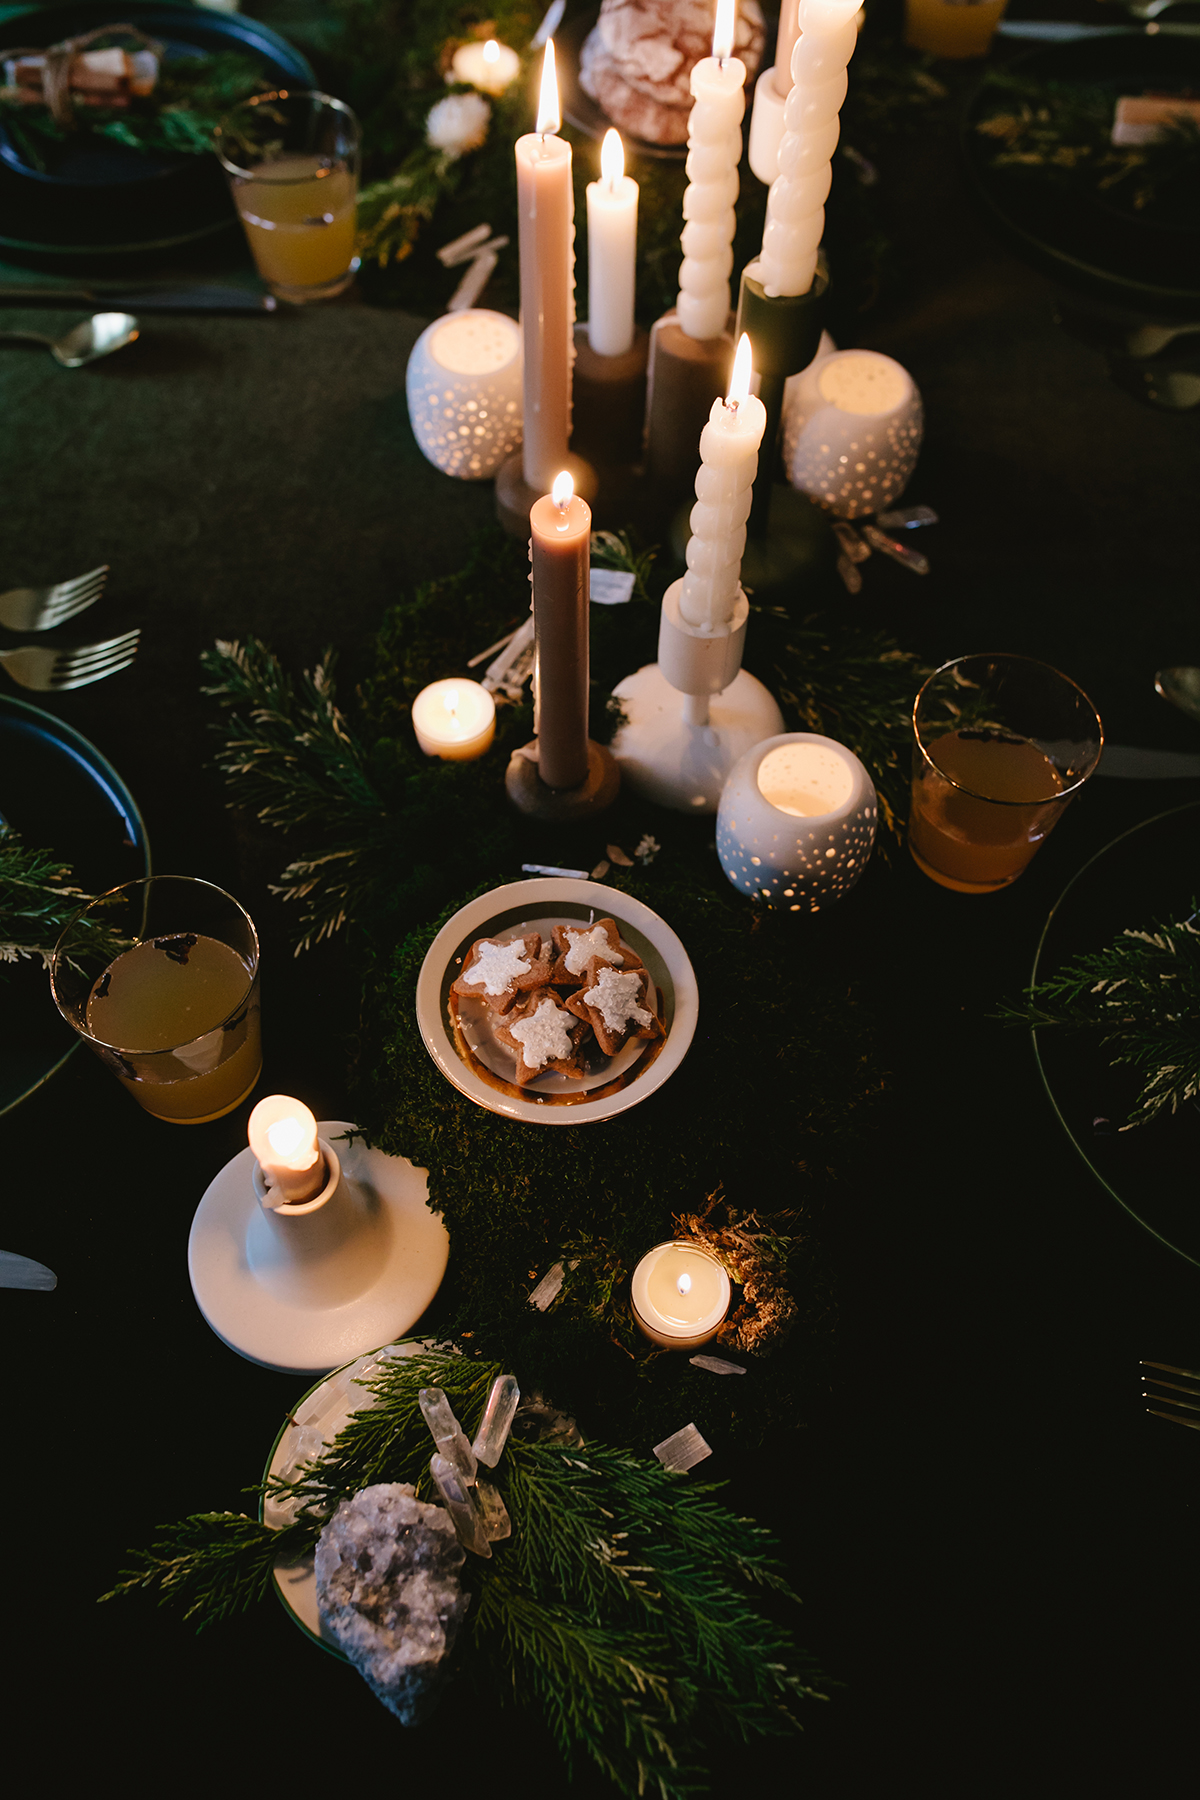 dîner de table solstice d'hiver | coco keley